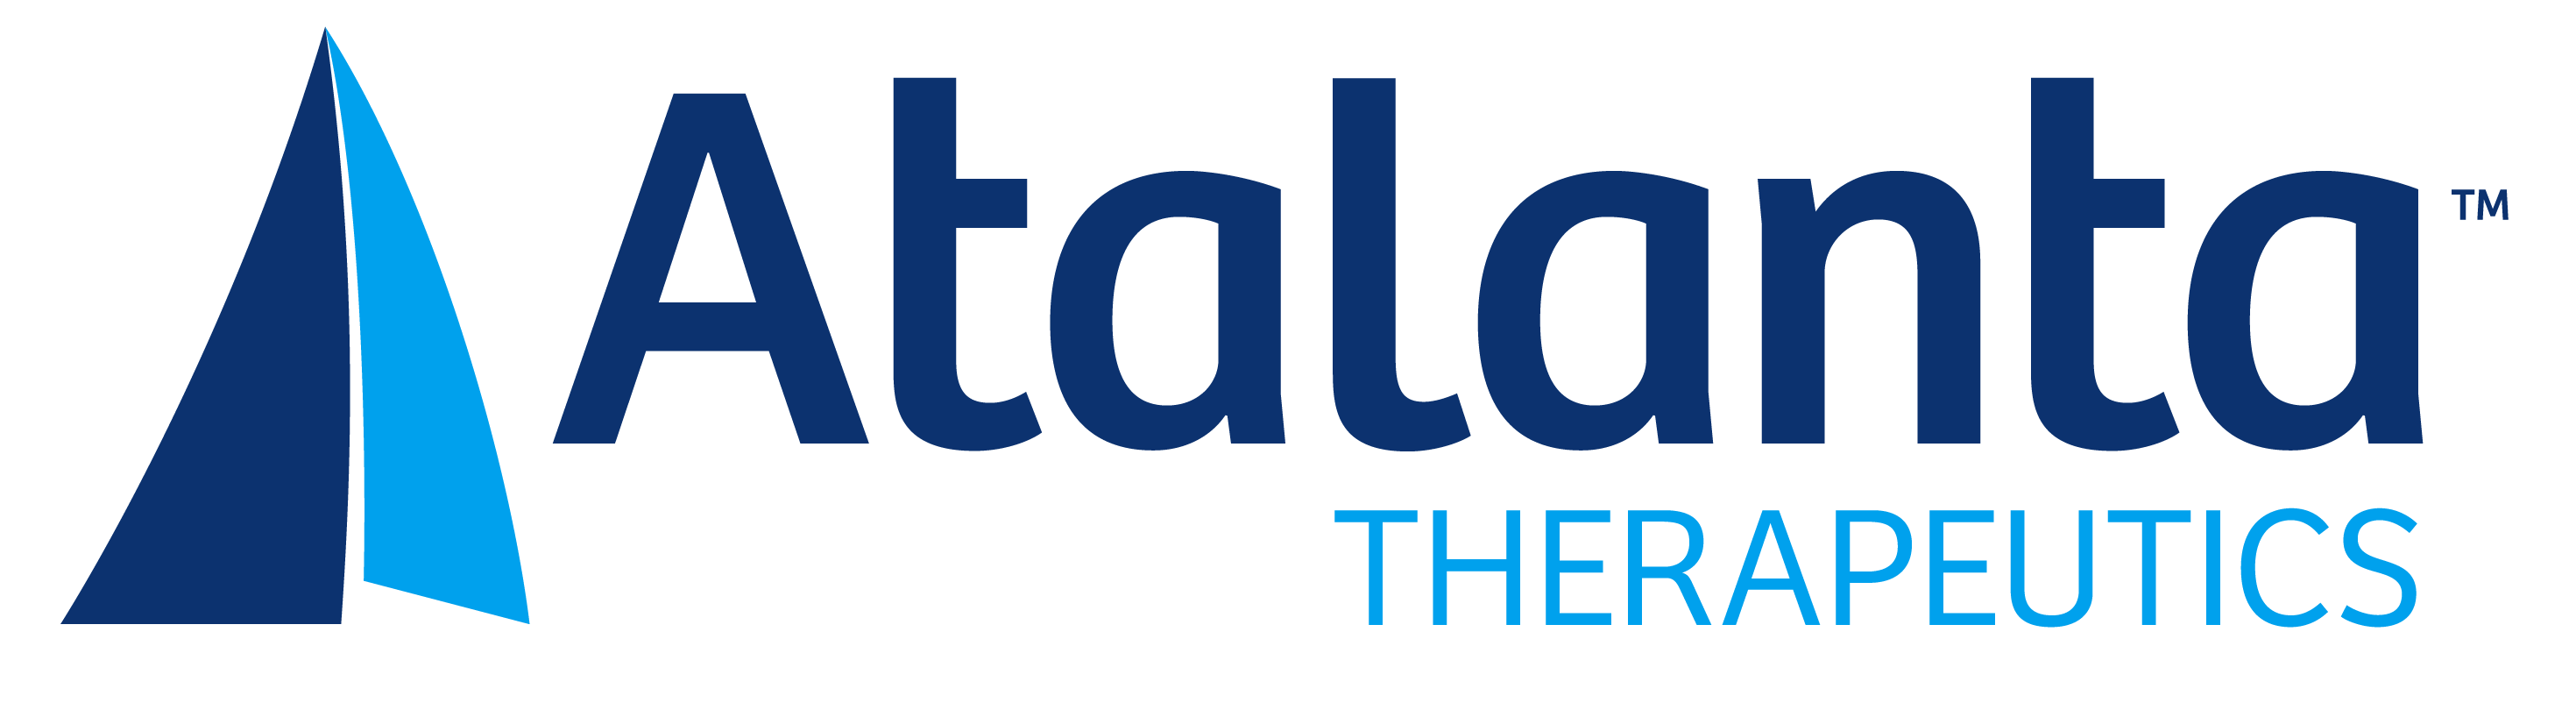 Atalanta Therapeutics logo